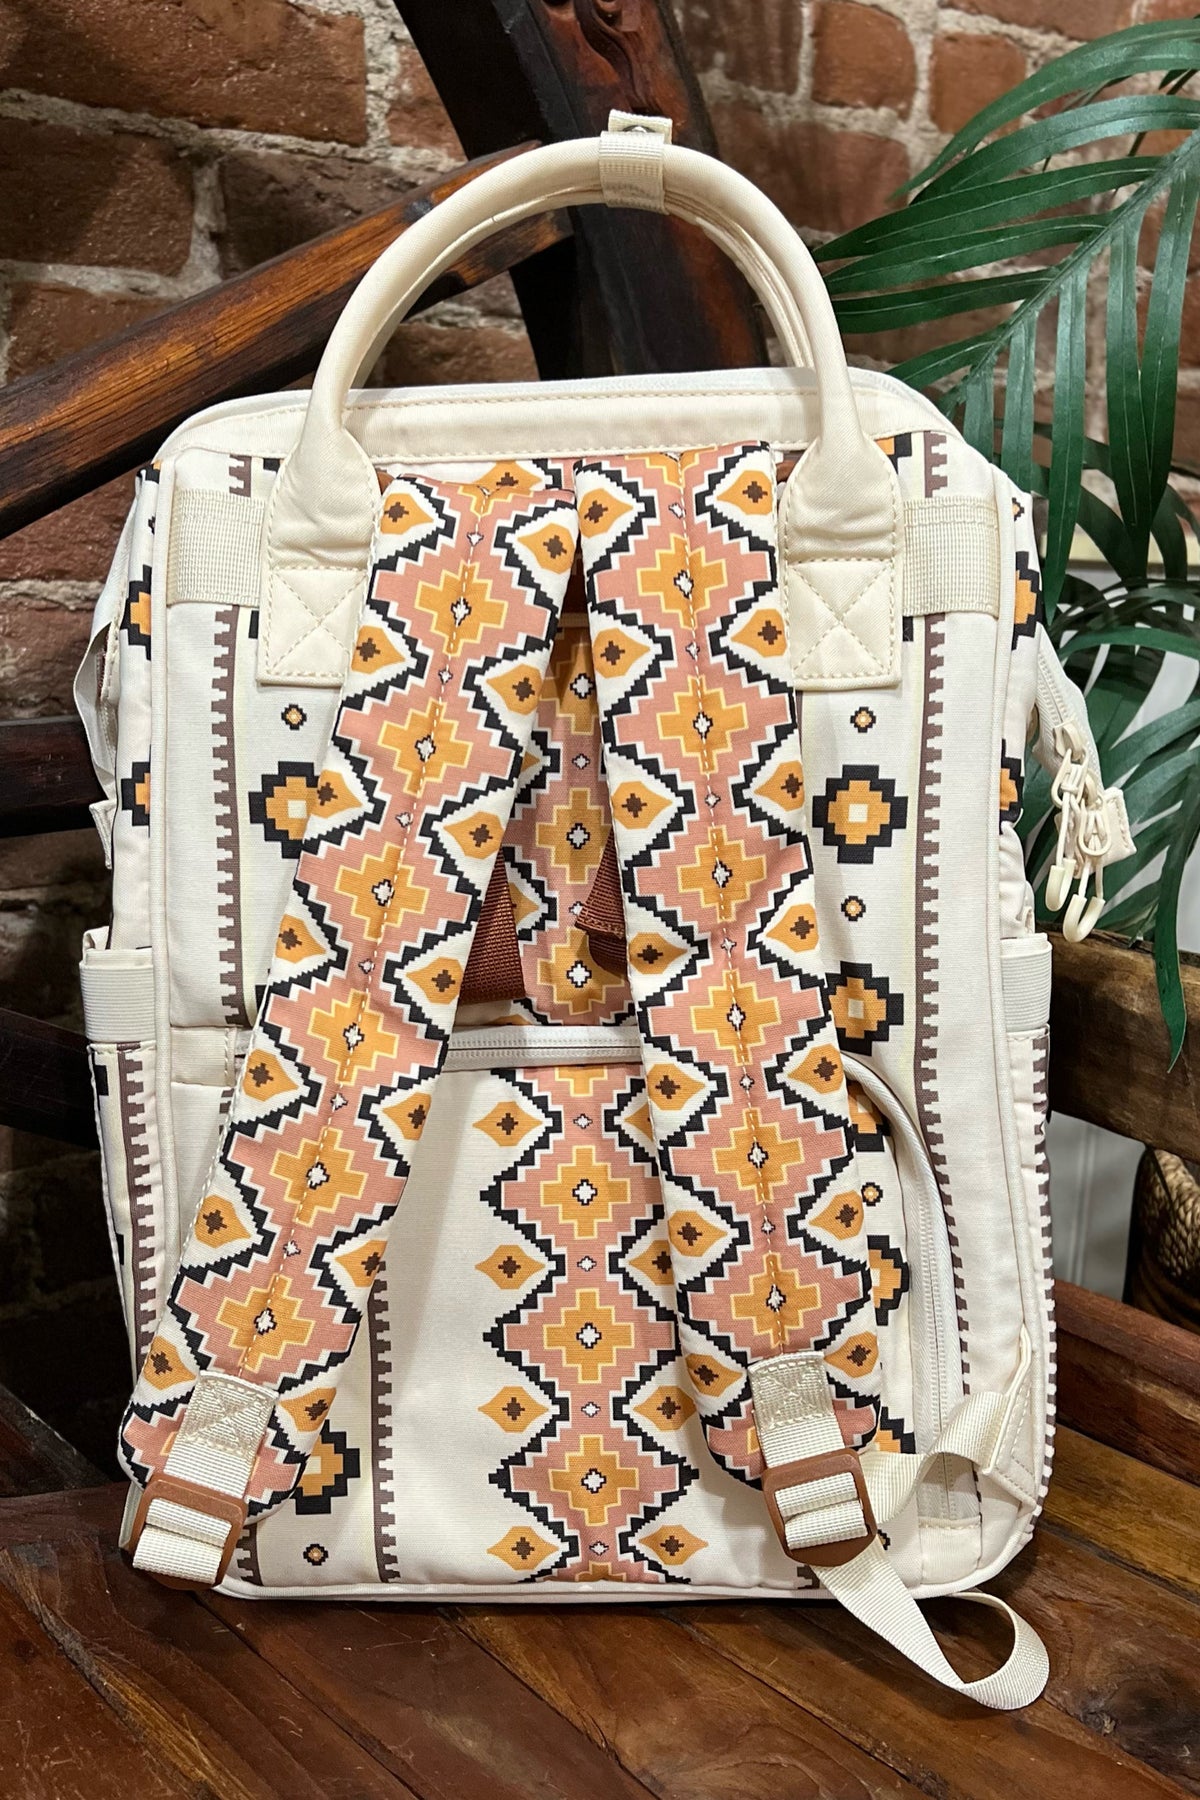 Wrangler Tan Allover Aztec Multi Function Backpack-Handbags & Accessories-Montana West-Gallop 'n Glitz- Women's Western Wear Boutique, Located in Grants Pass, Oregon